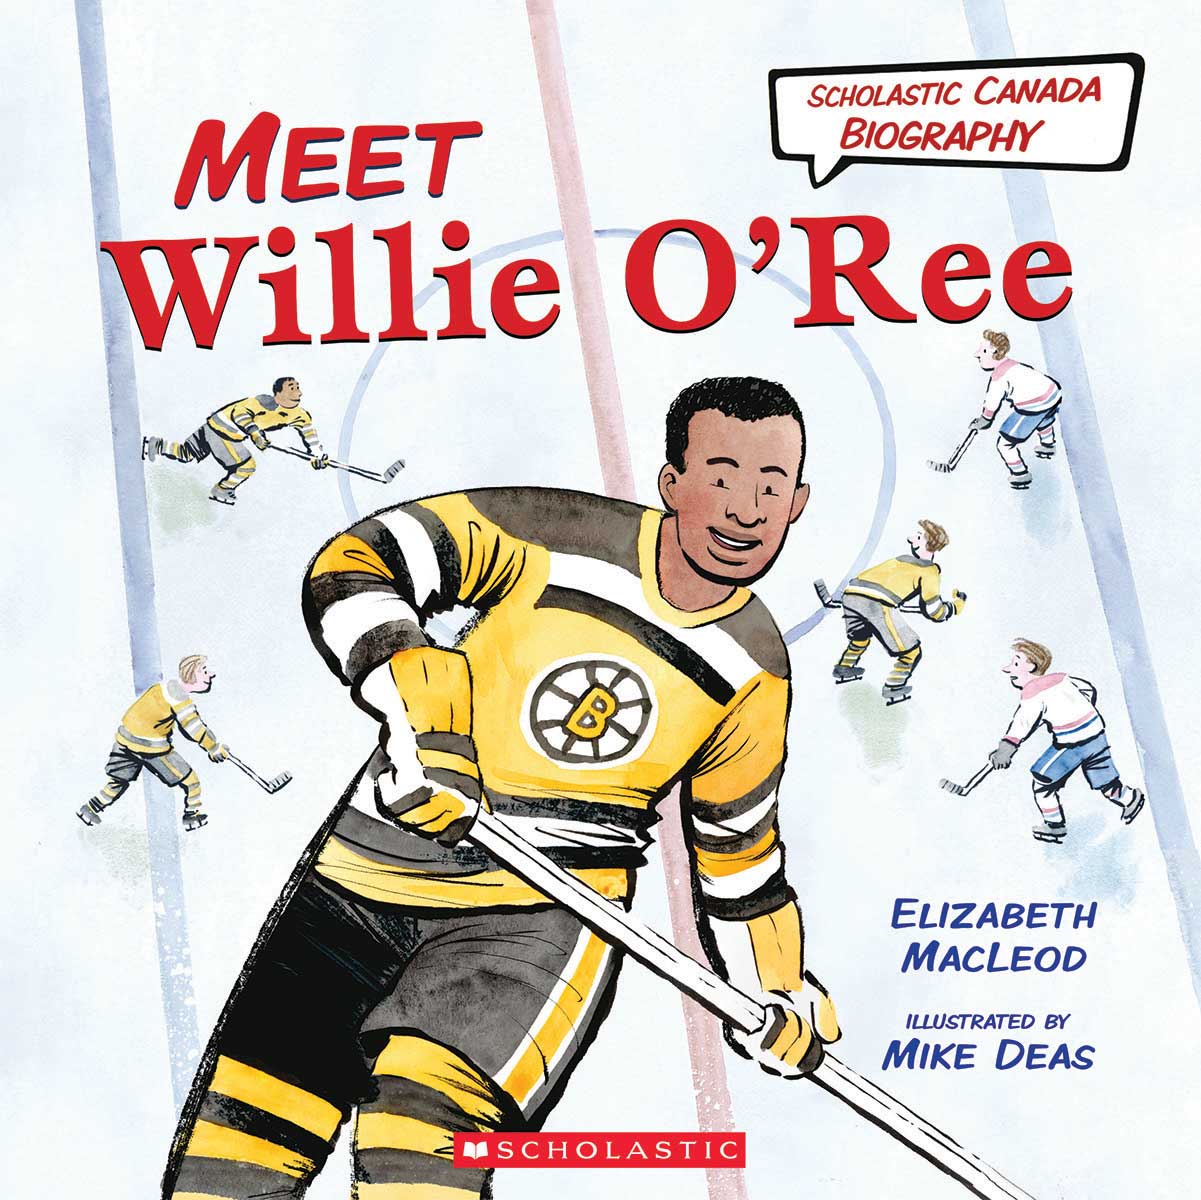 Scholastic Canada Biography: Meet Willie O’Ree